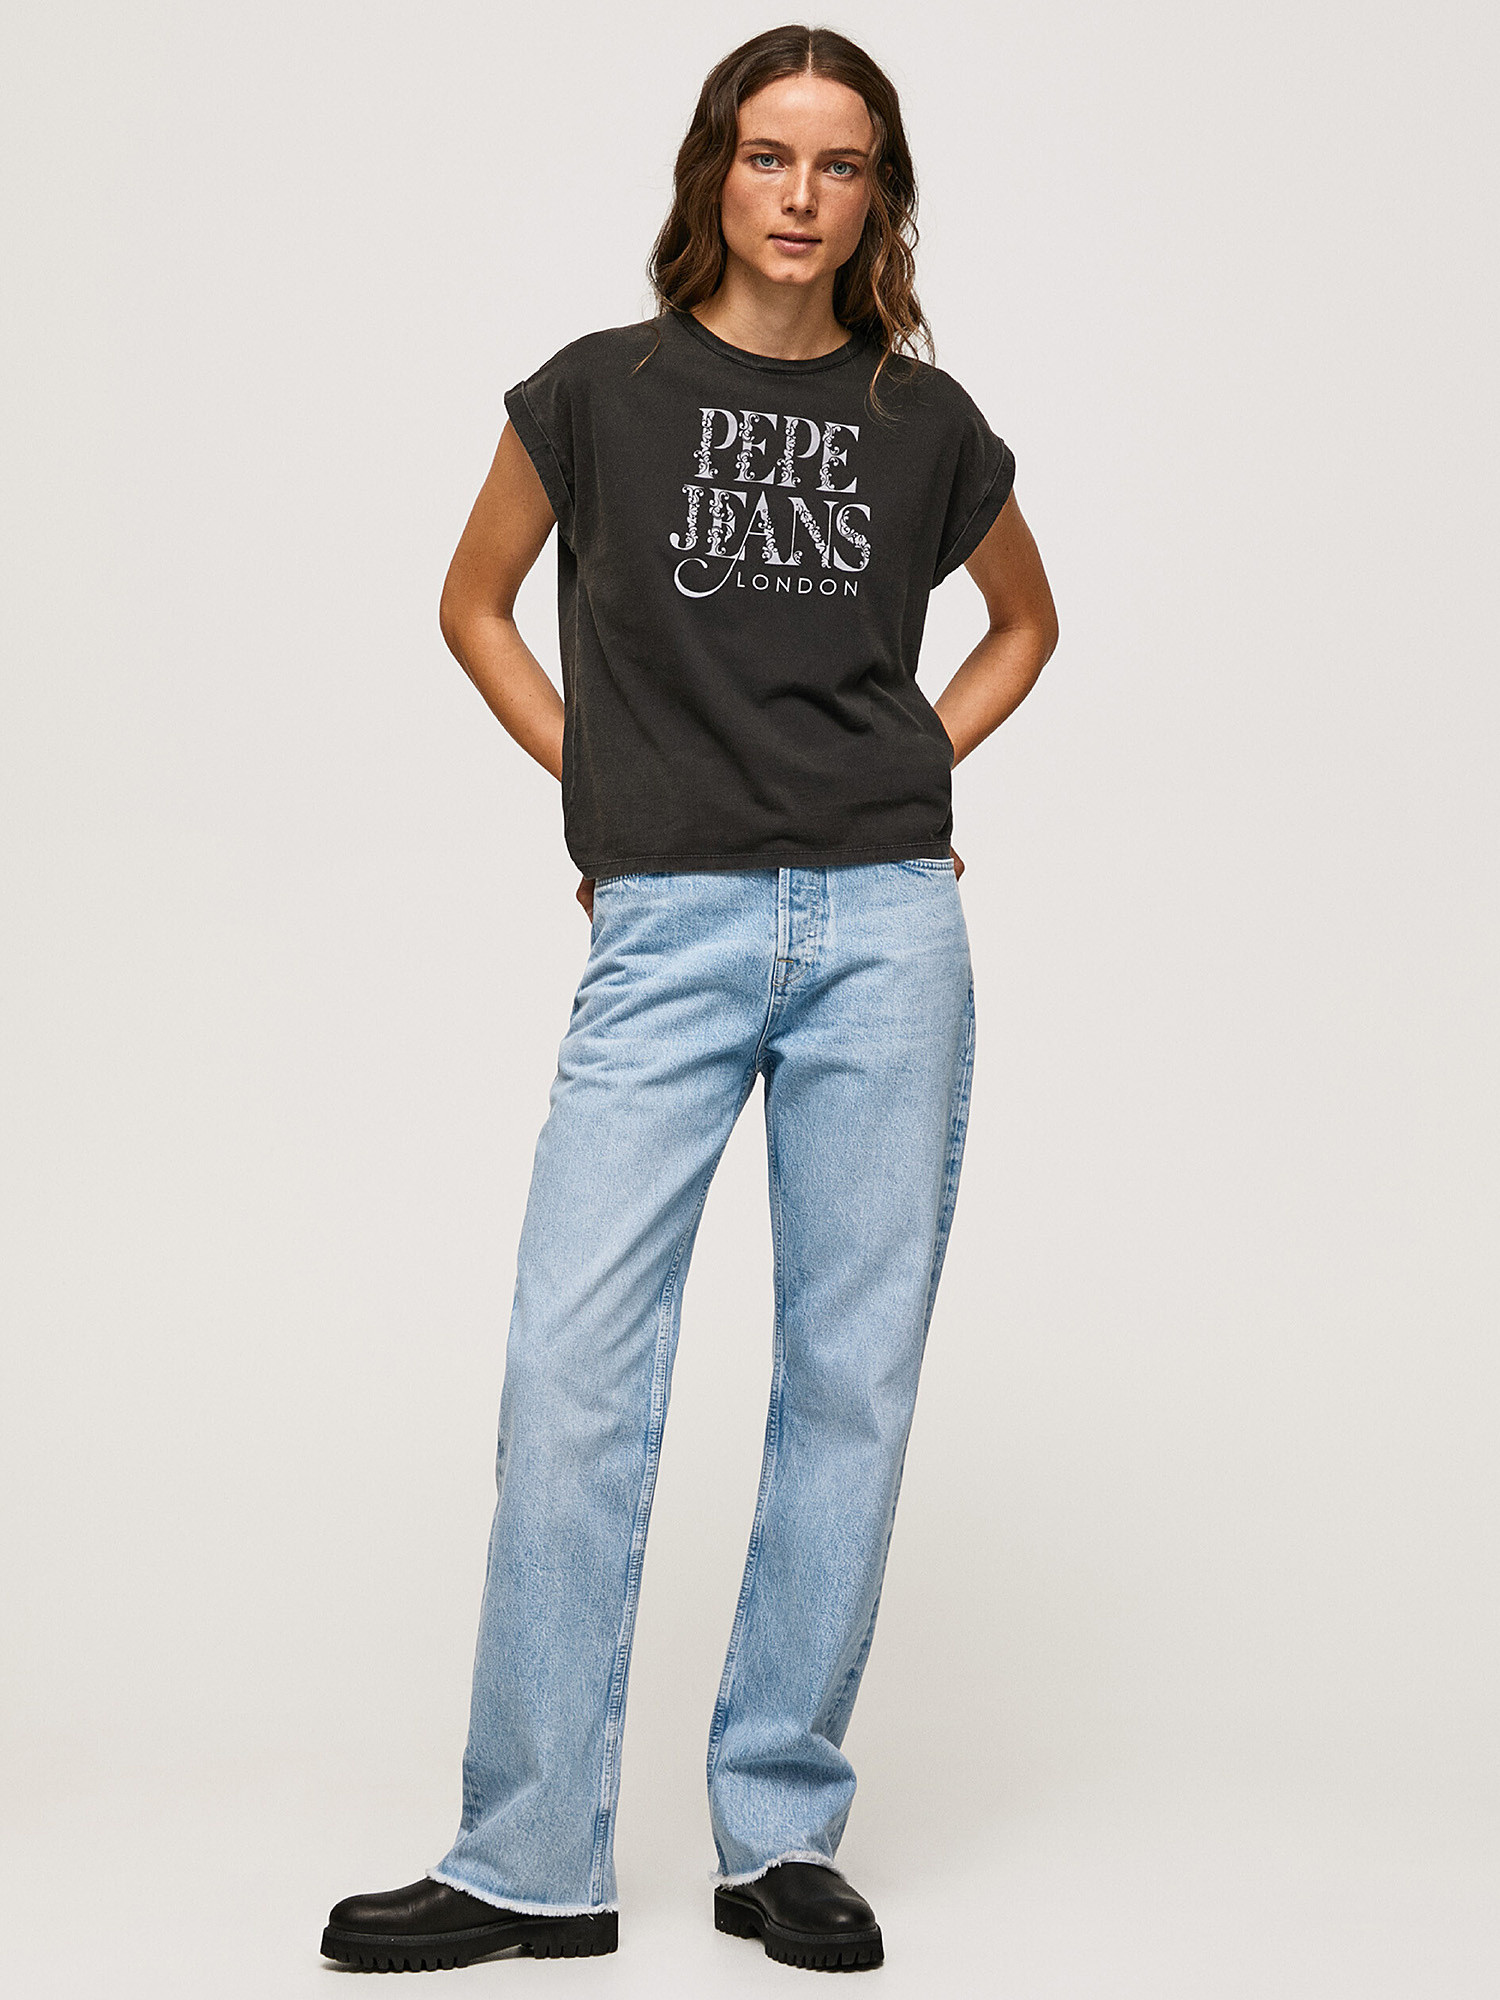 Pepe Jeans - Cotton logo T-shirt, Black, large image number 6